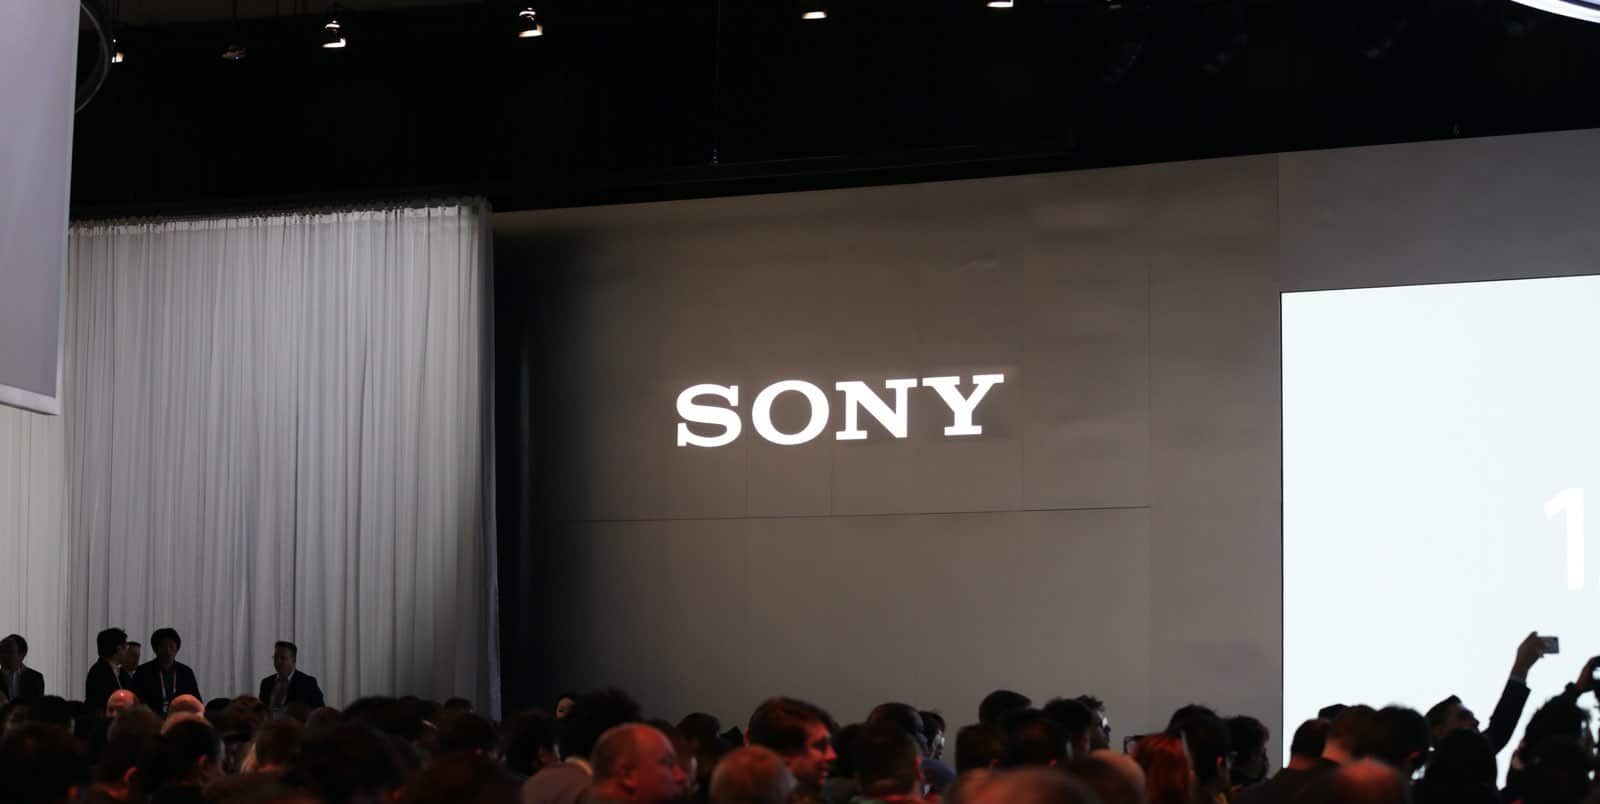 Sony presenta i nuovi televisori Full Array LED 8K, OLED 4K e Full Array LED 4K al CES 2020 thumbnail